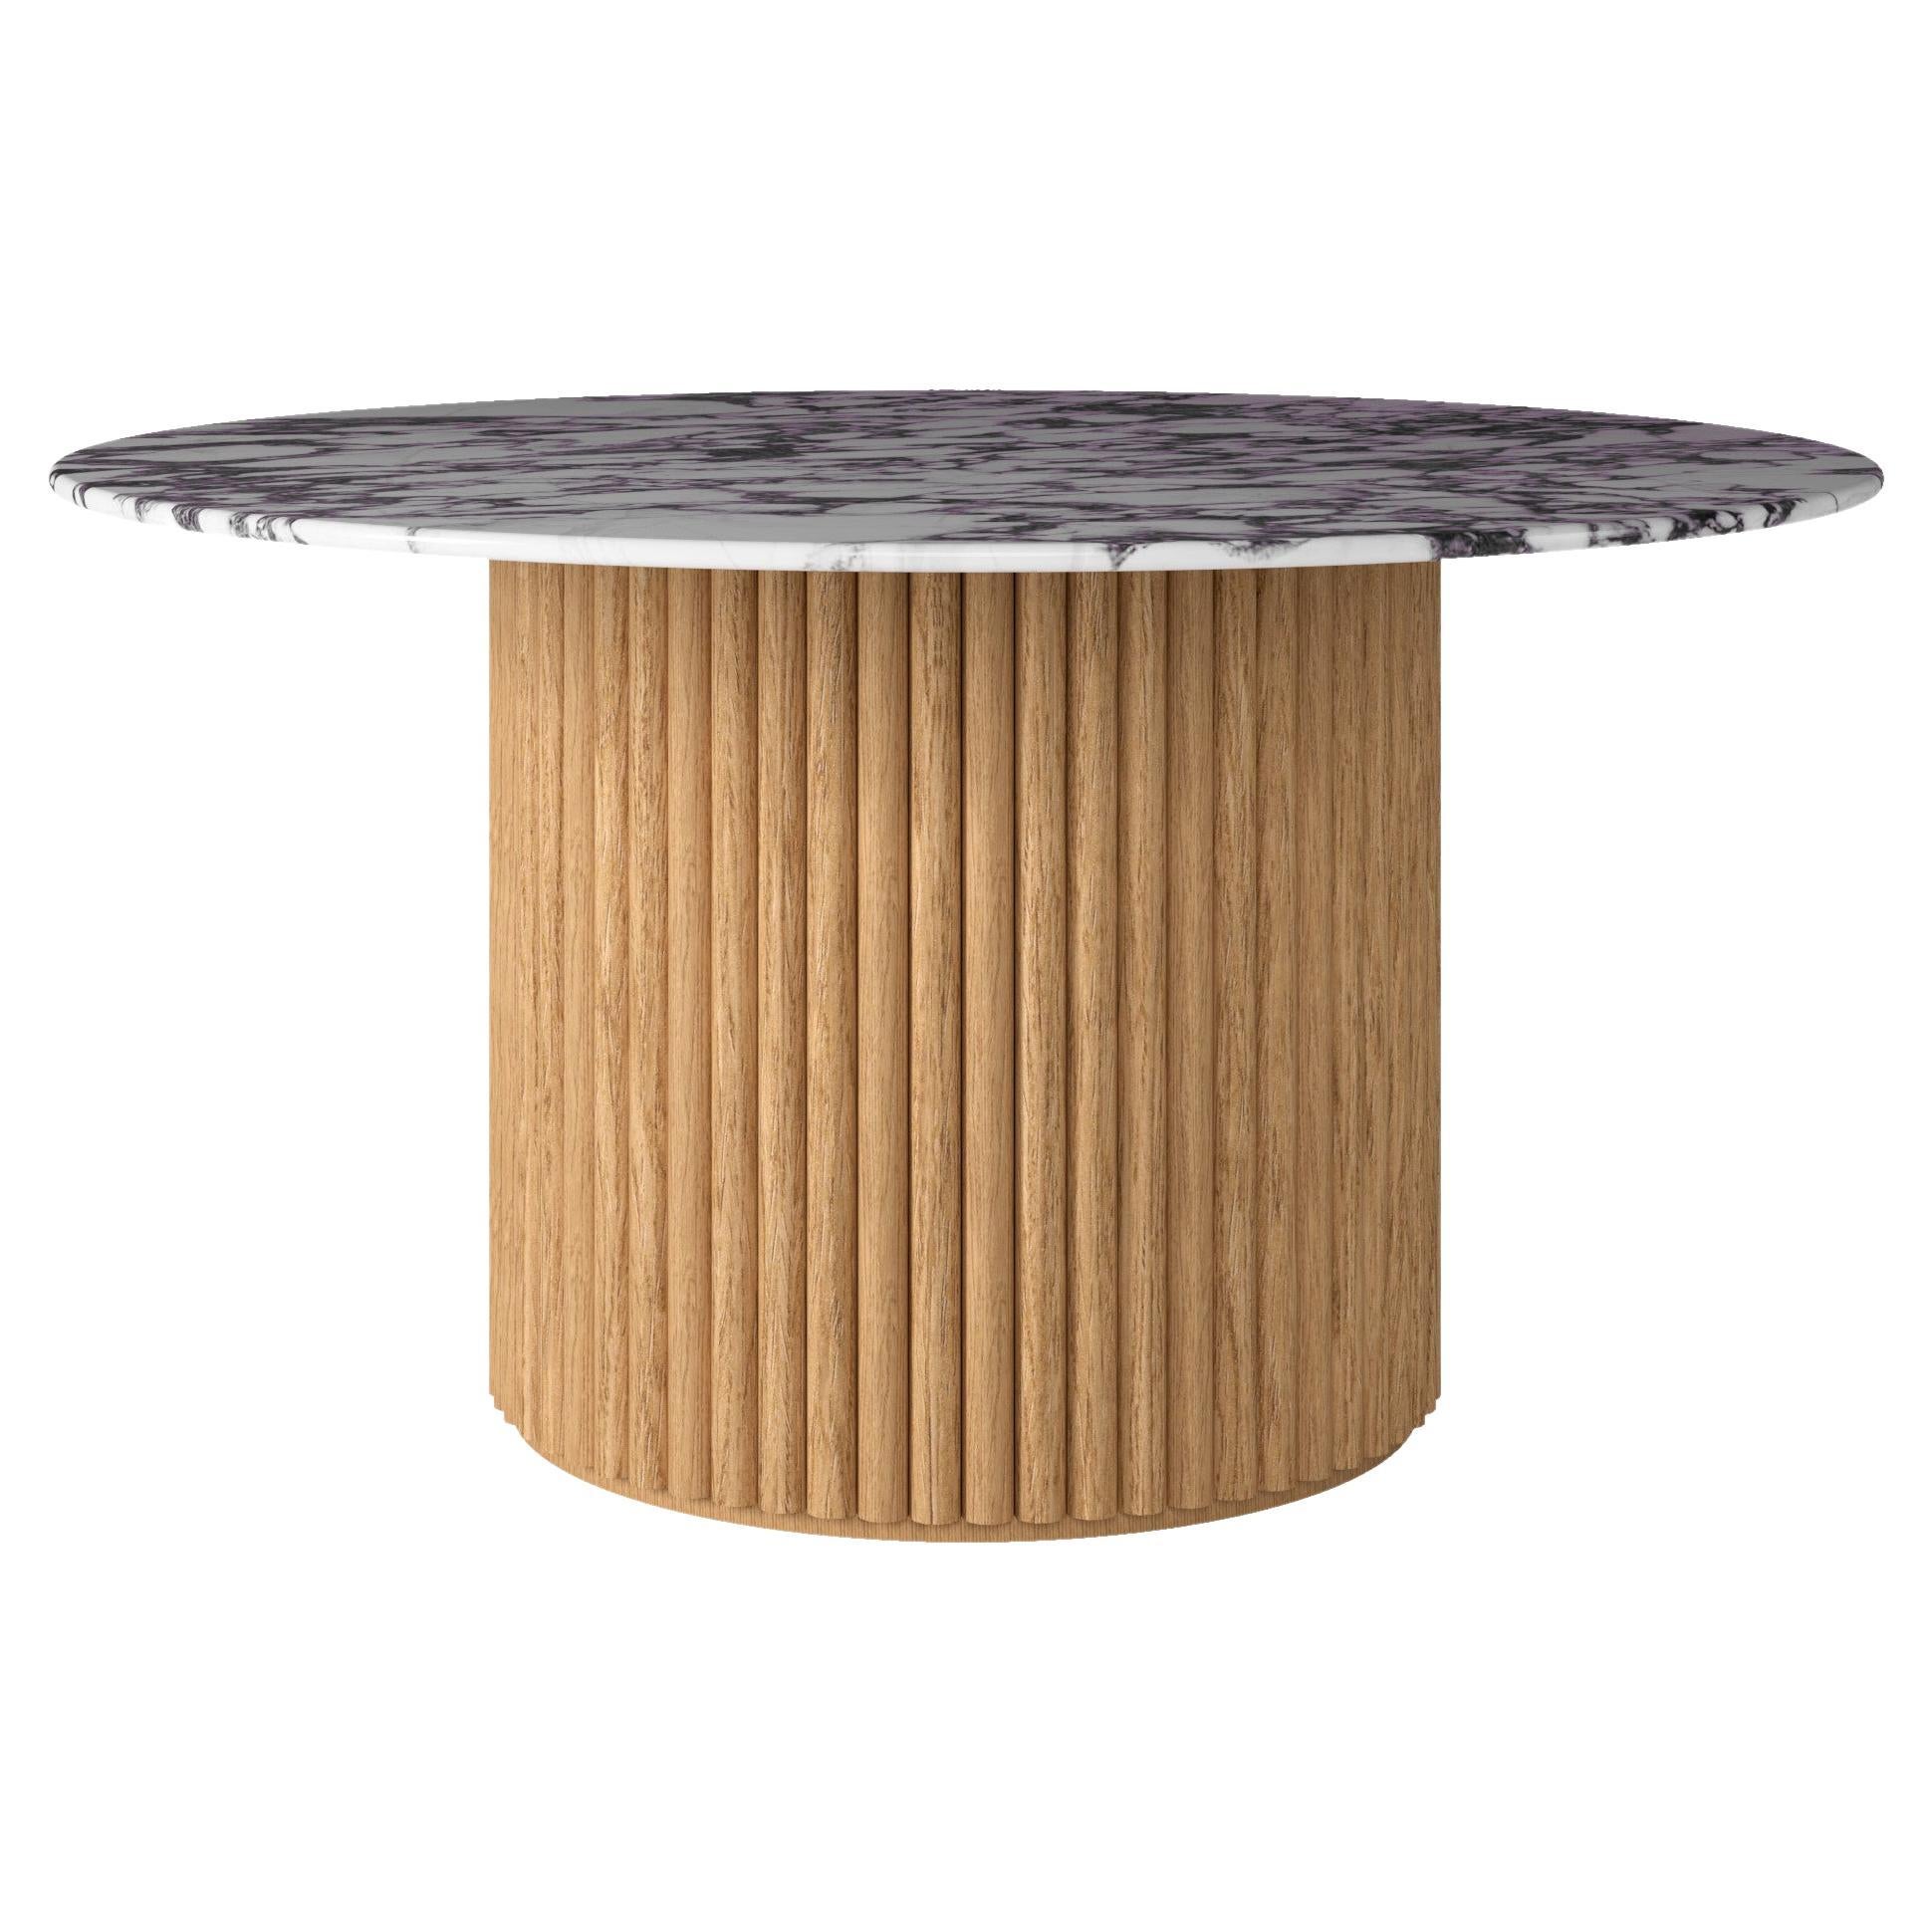 Scandinavian Modern NORDST Mette Dining Table, Italian Calacatta viola Marble, Danish Modern Design For Sale